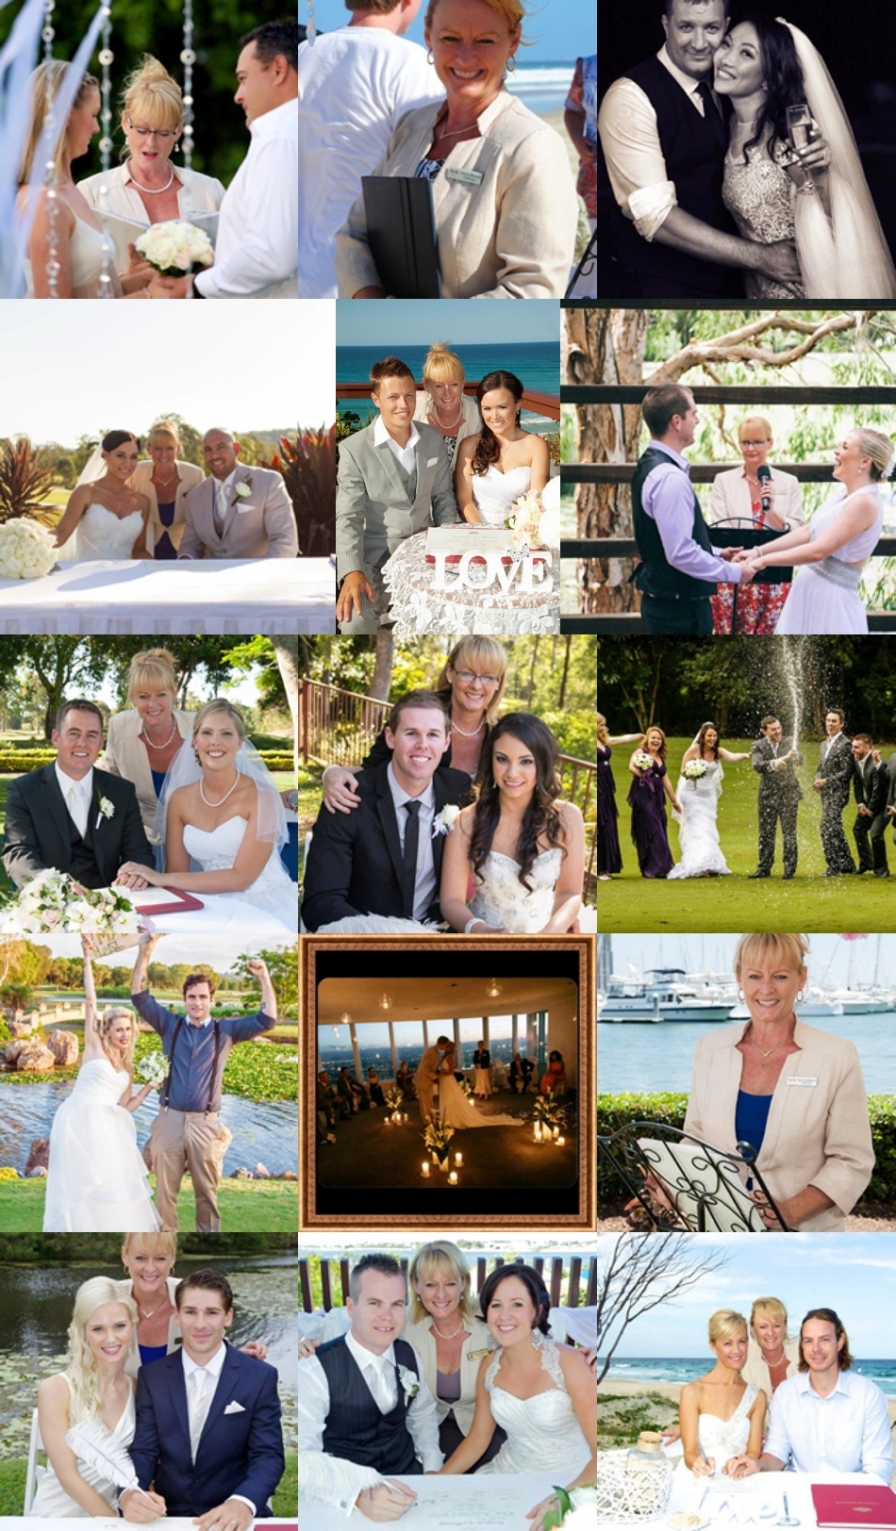 Tarnya – Gold Coast Wedding Celebrant – 2014 Update